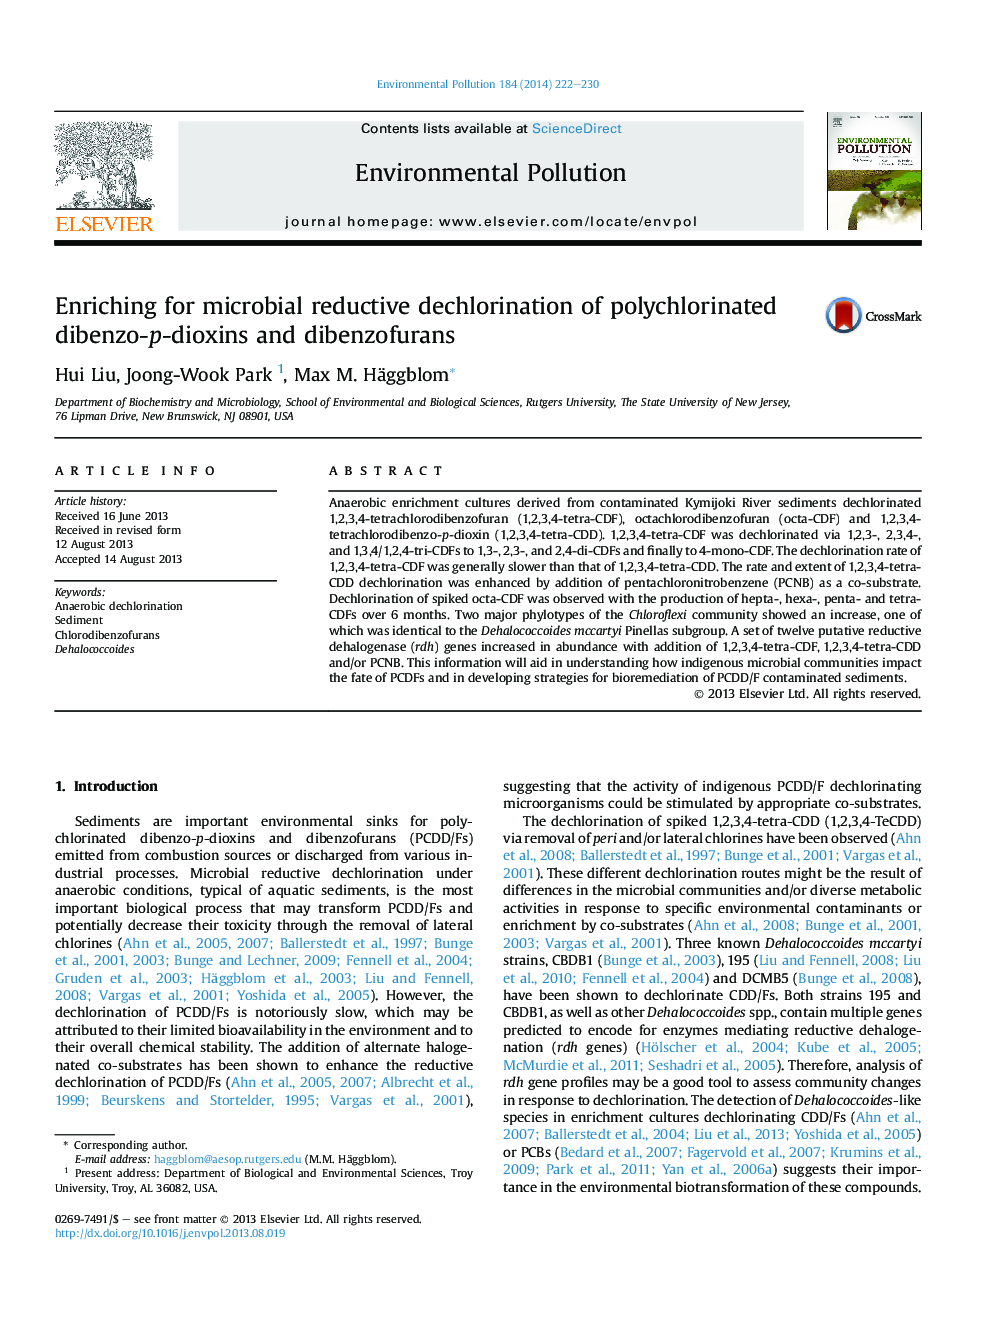 Enriching for microbial reductive dechlorination of polychlorinated dibenzo-p-dioxins and dibenzofurans